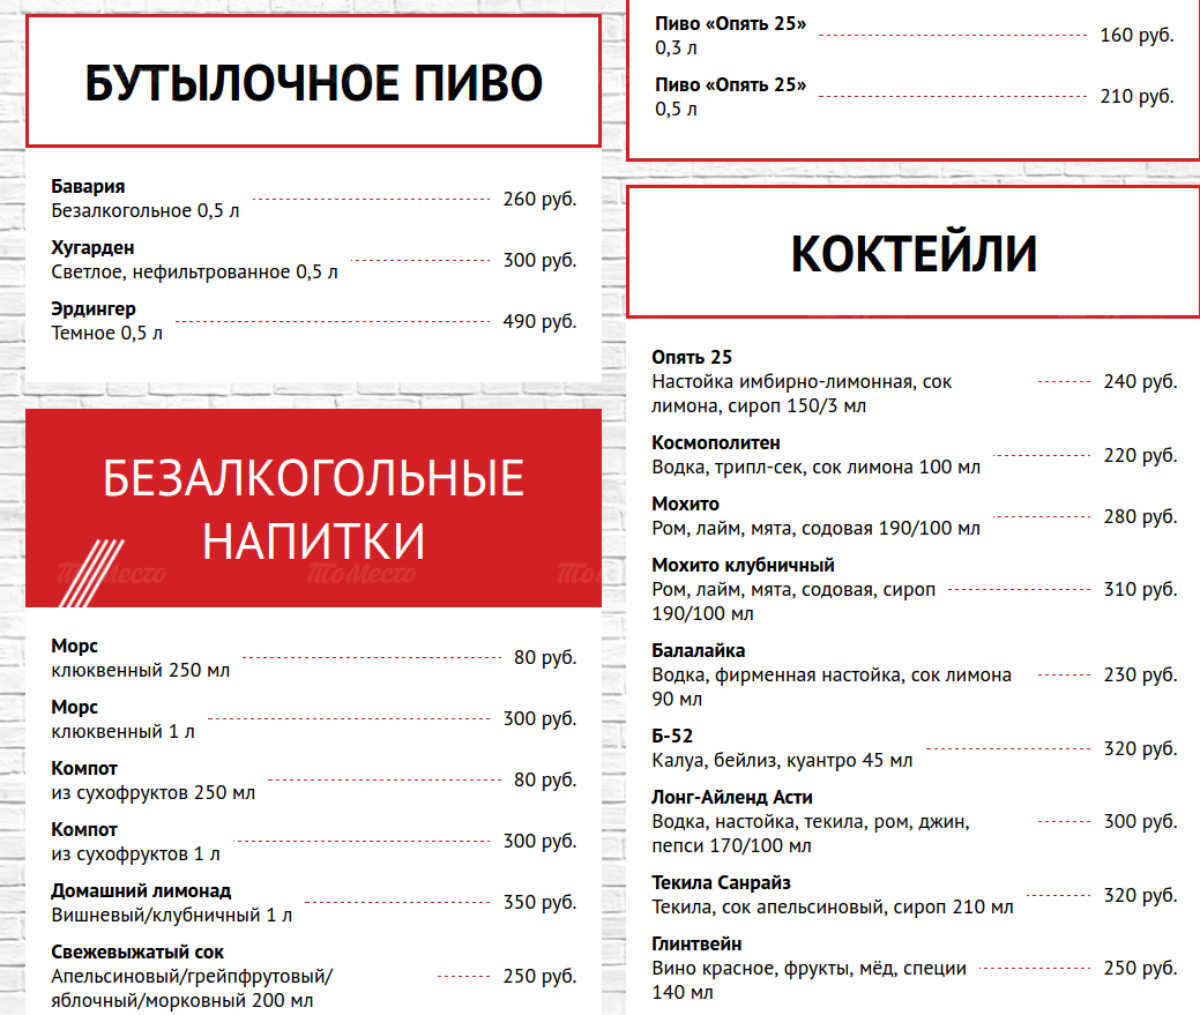 Сайт ресторана барнаул меню. Ресторан Барнаул меню. Опять 25 ресторан меню. Ресторан среда Барнаул меню.